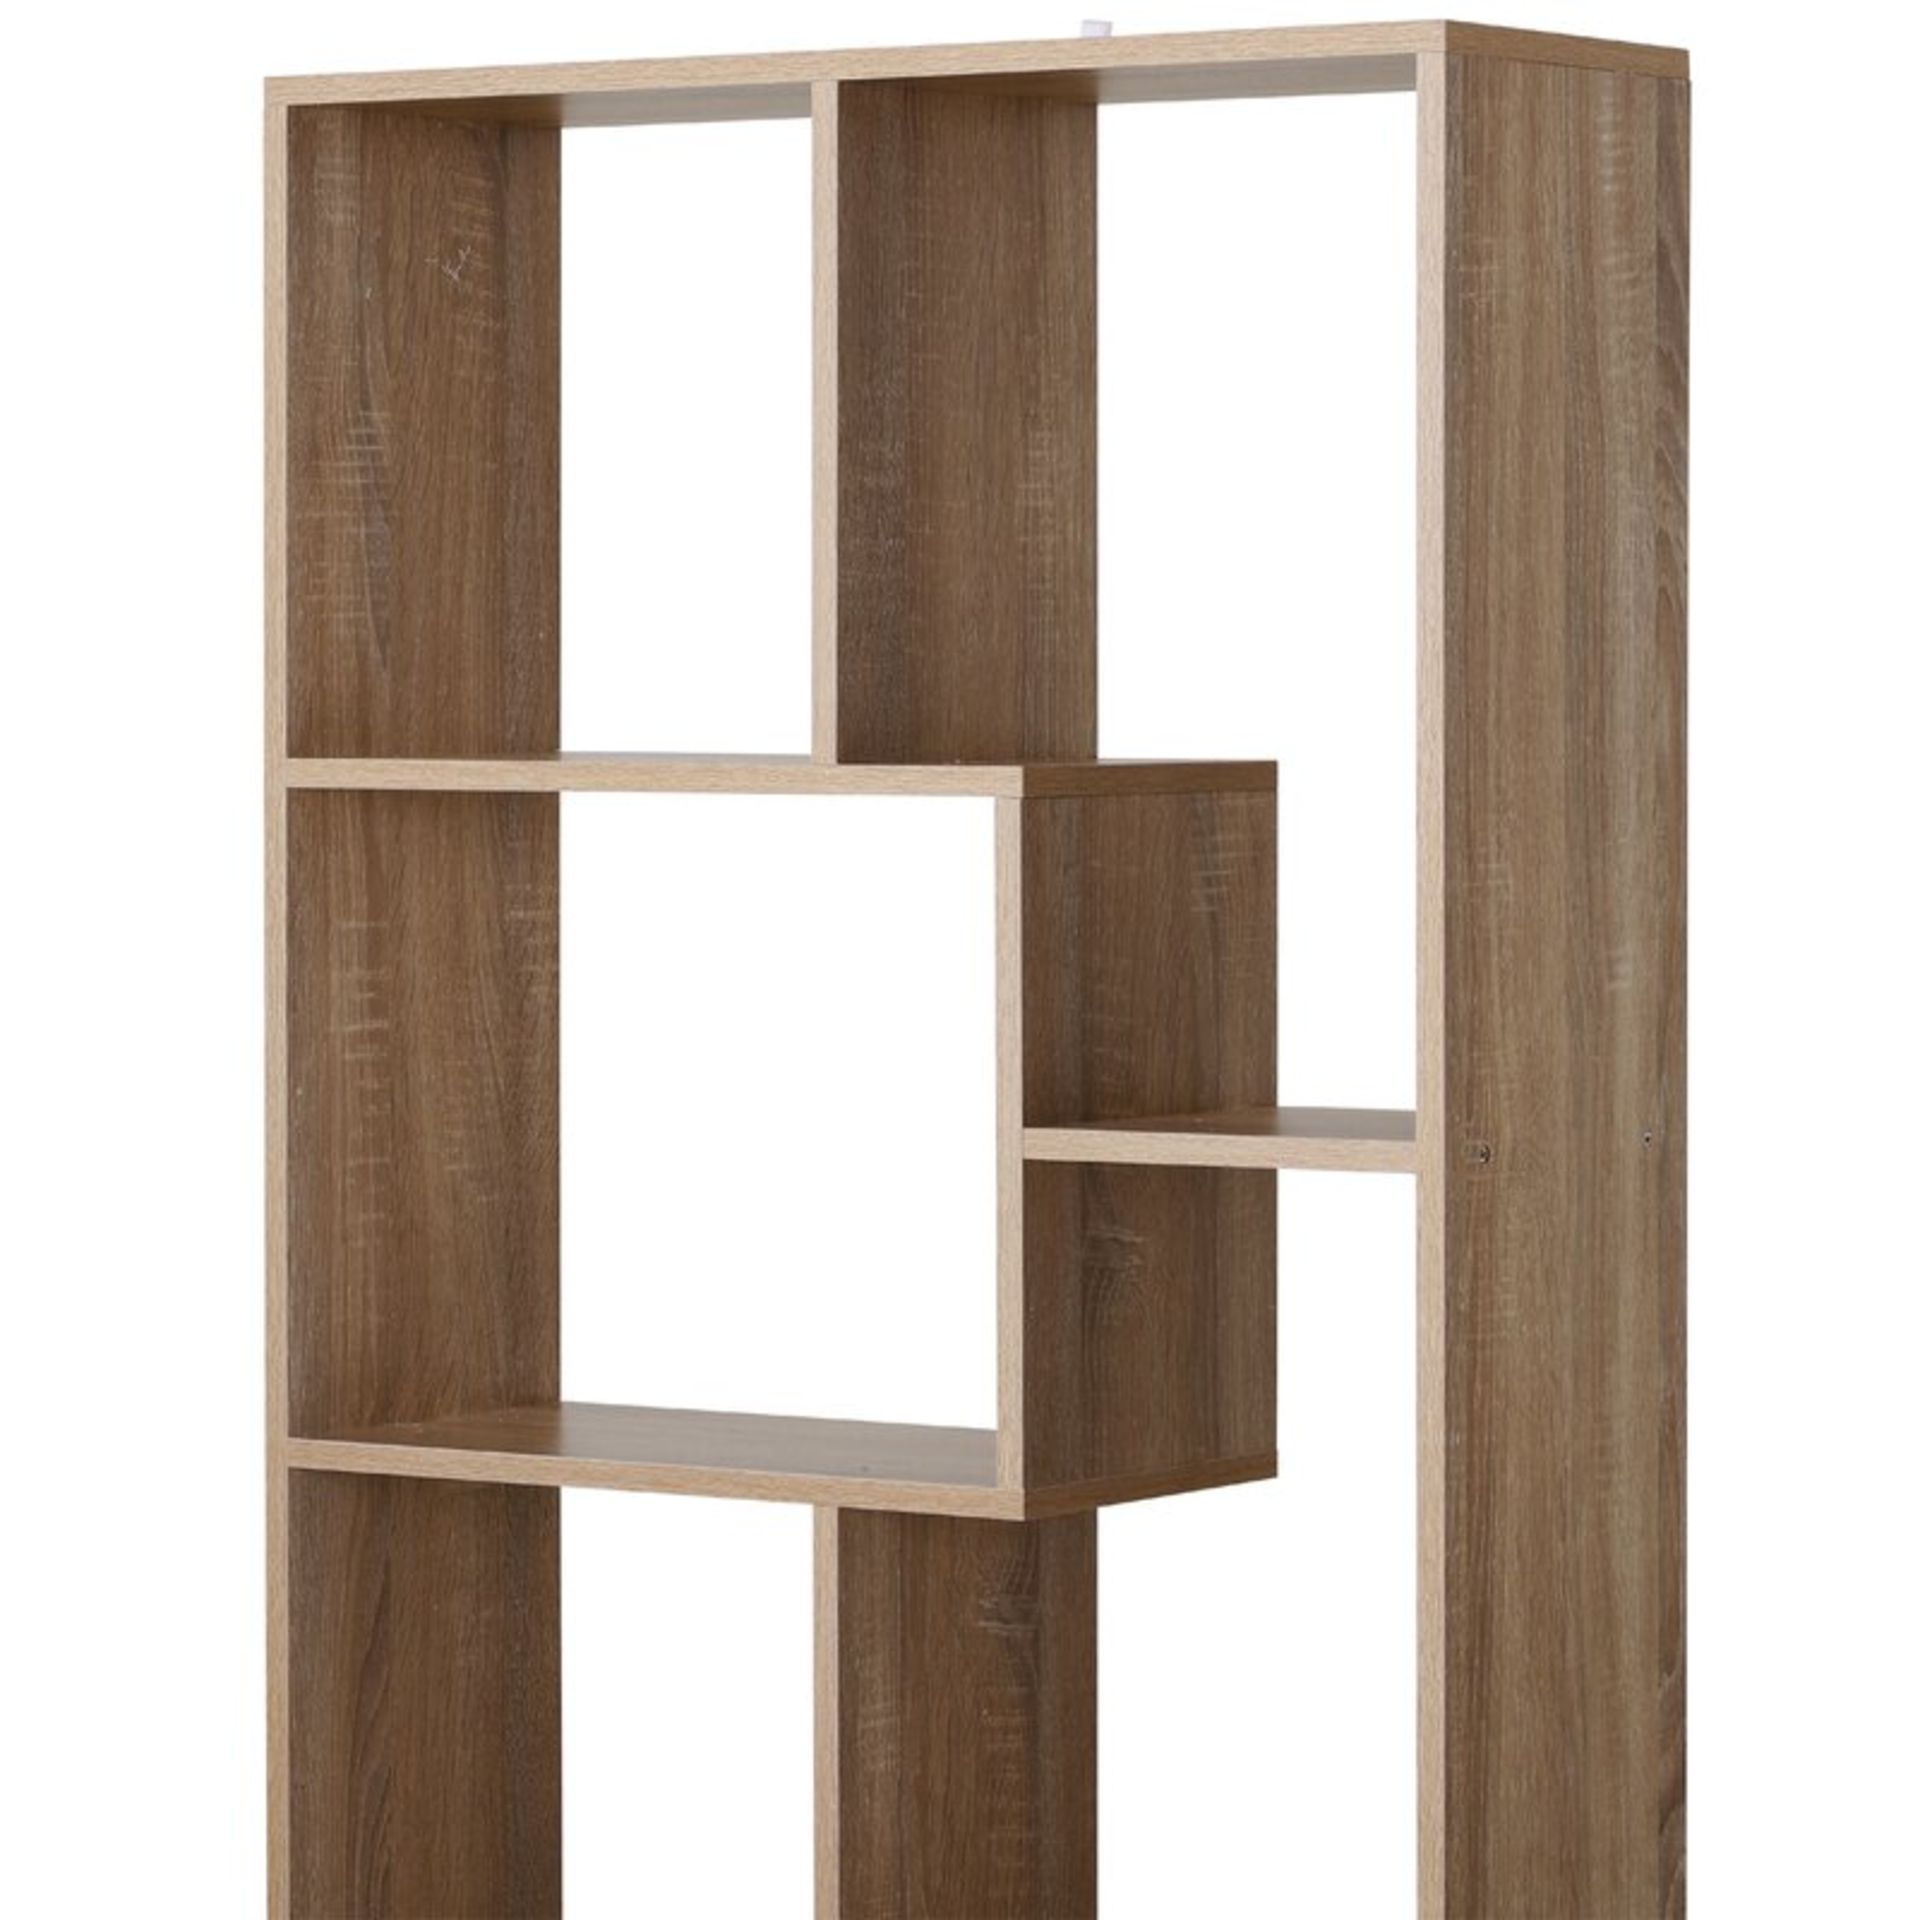 Venetta Standard Bookcase - RRP £229.99. - Image 3 of 6